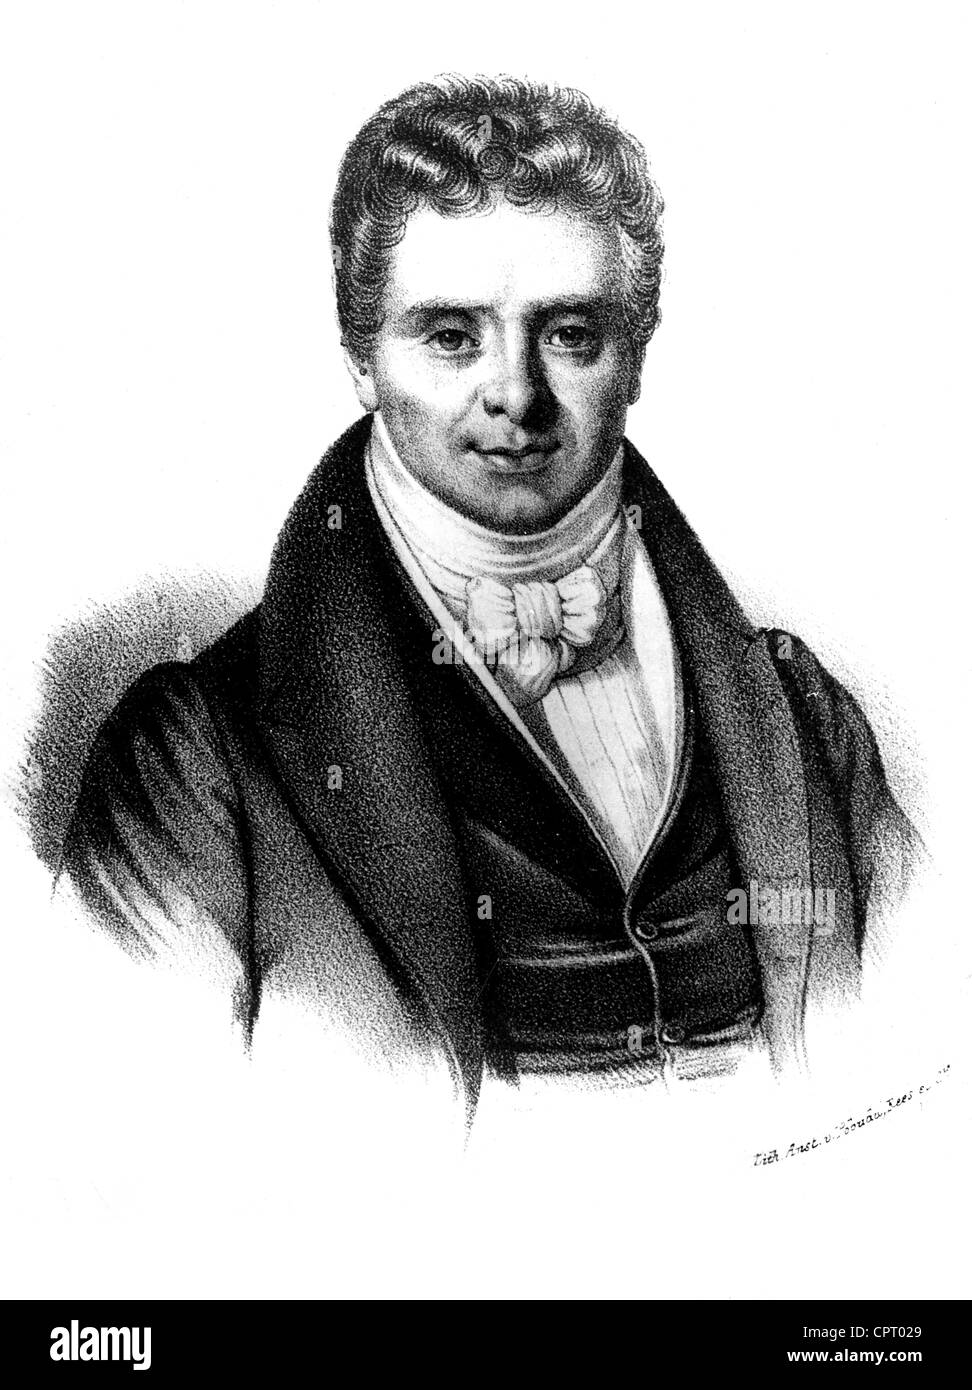 O'Connell, Daniel, 6.8.1775 - 15.5.1847, Irish politician, portrait, lithograph by F. Elijah (+ 1846), 19th century, Stock Photo